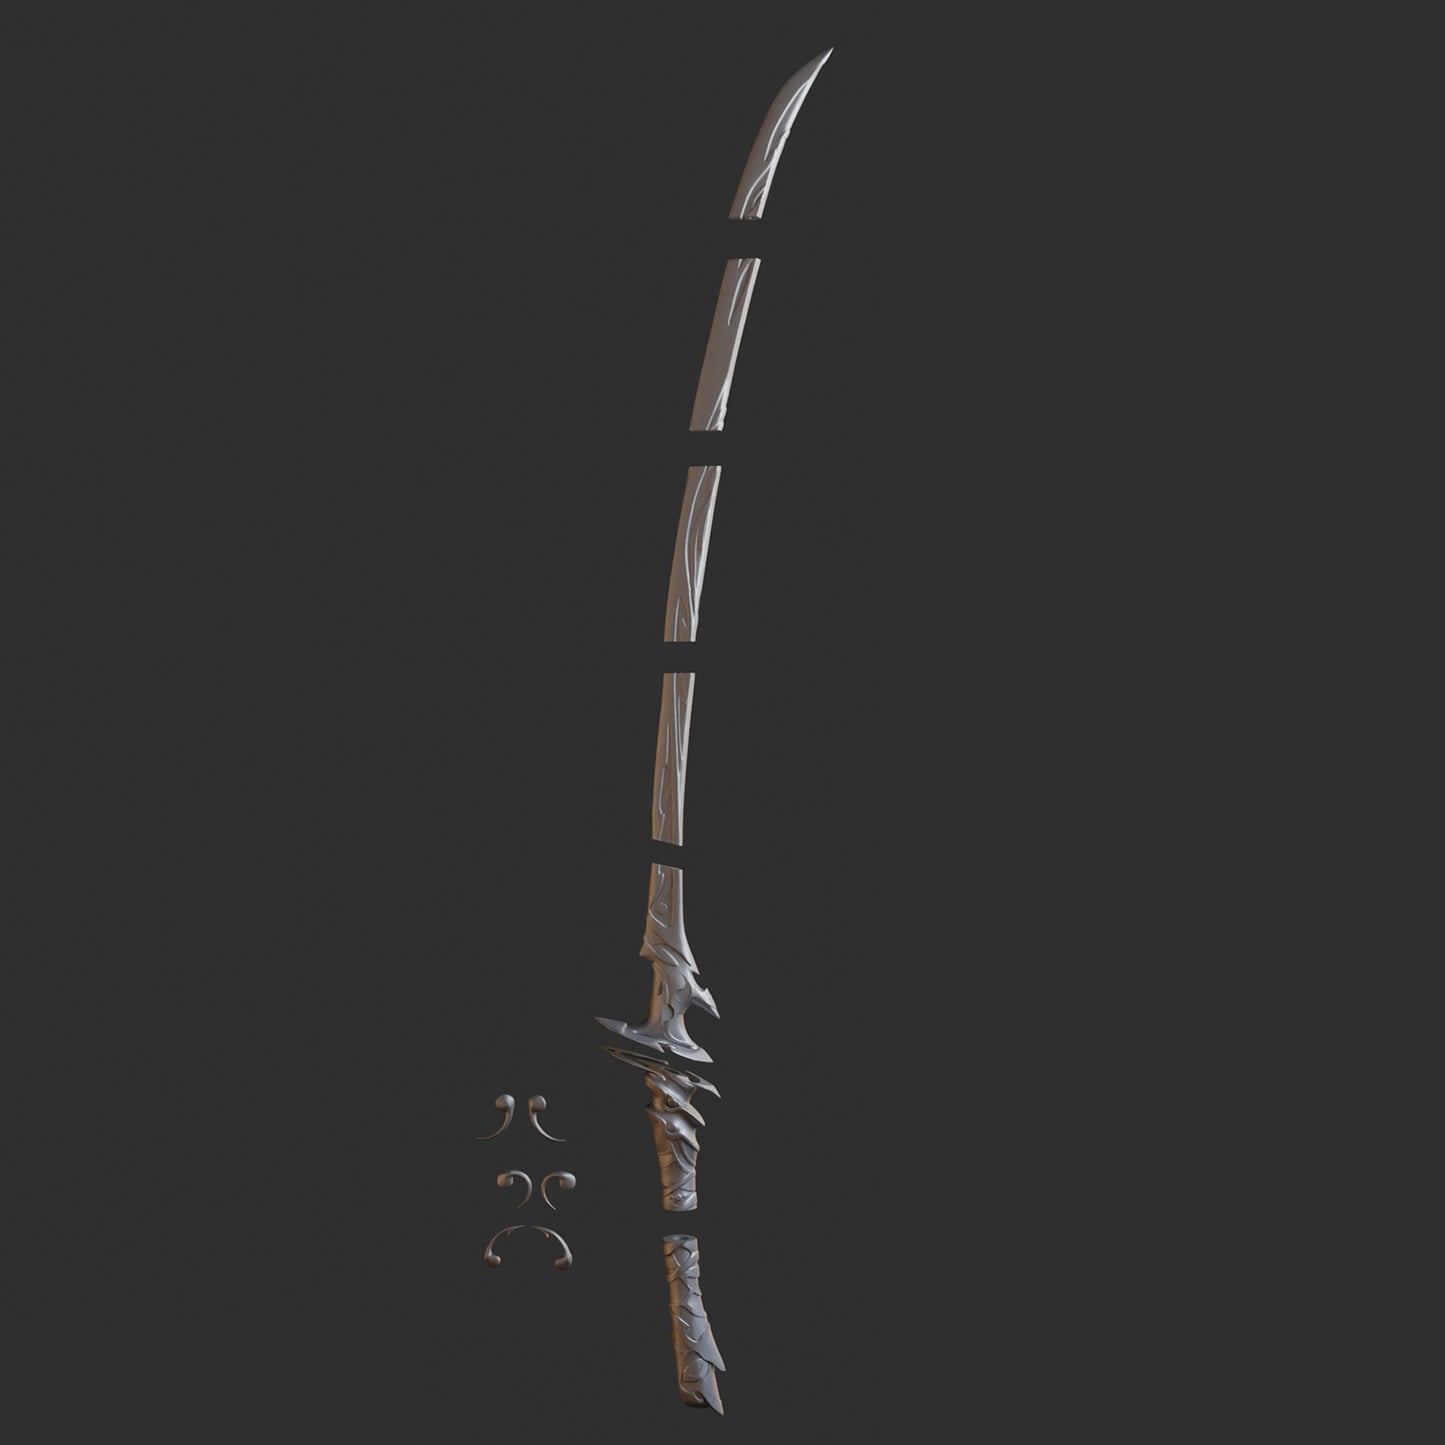 Raiden Shogun Katana - Digital 3D Model Files and Physical 3D Printed Kit Options - Baal Cosplay - Baal Sword - Raiden Shogun Cosplay